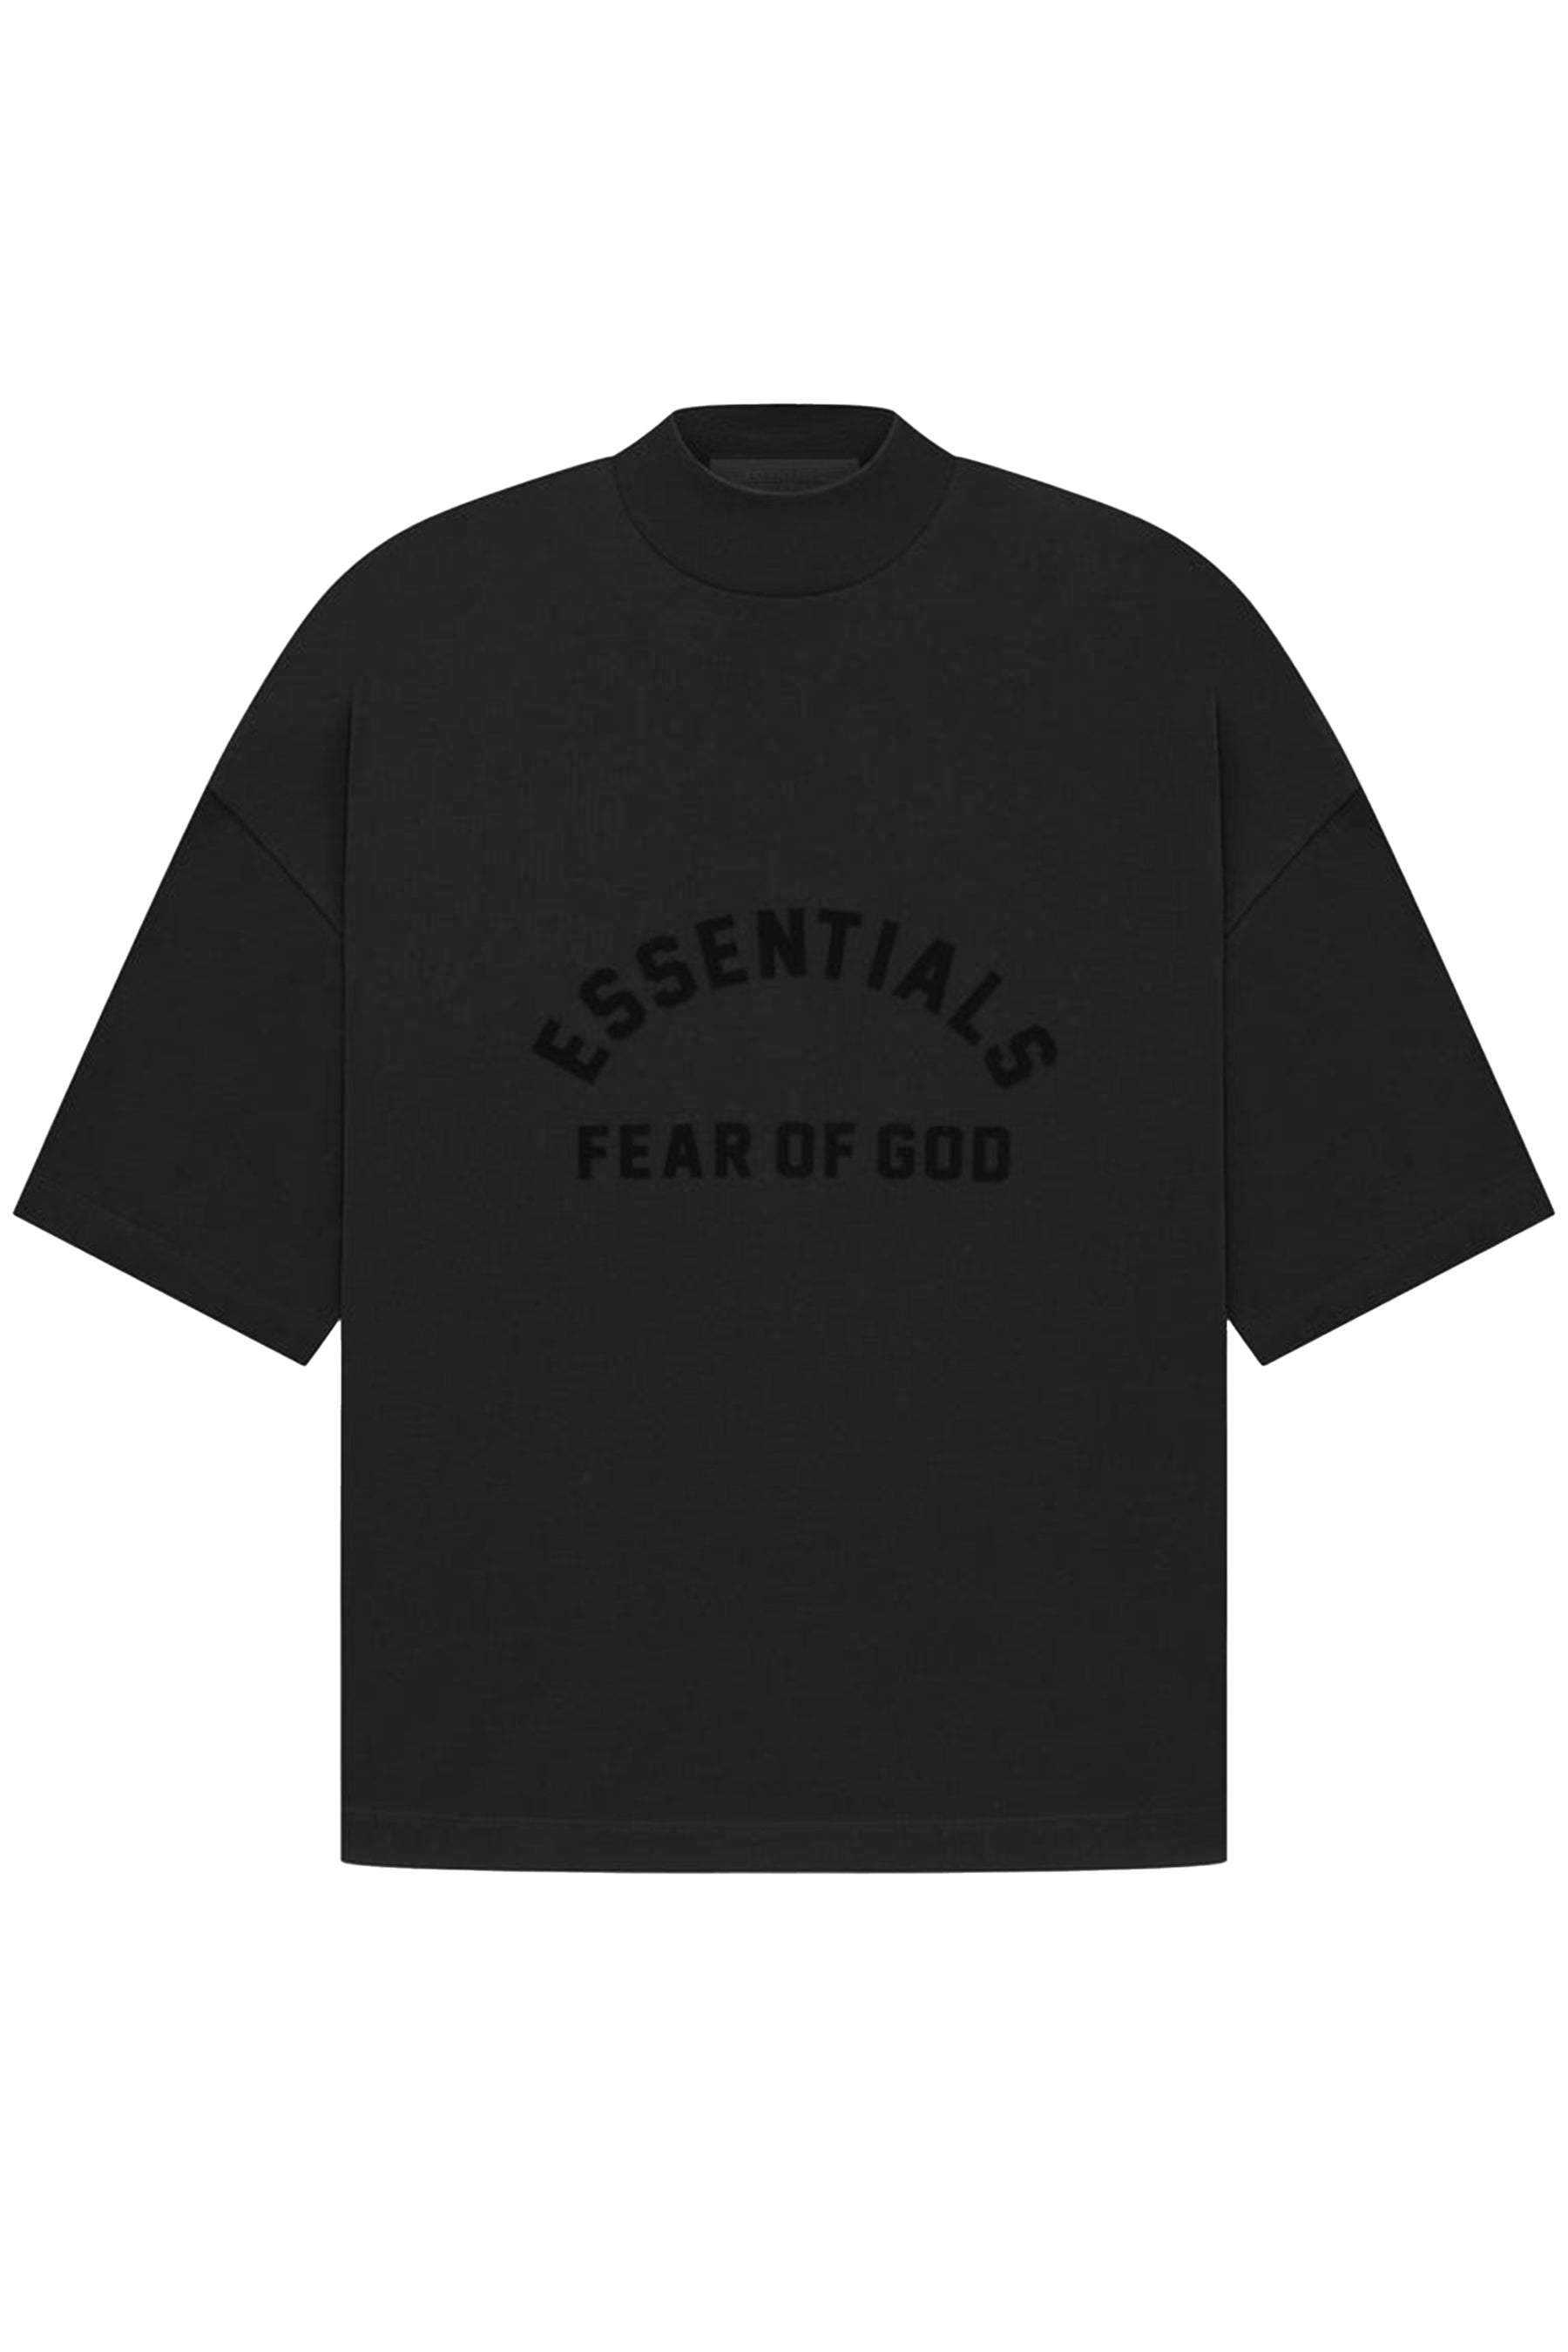 fear of god mesh Tシャツ グレー XL